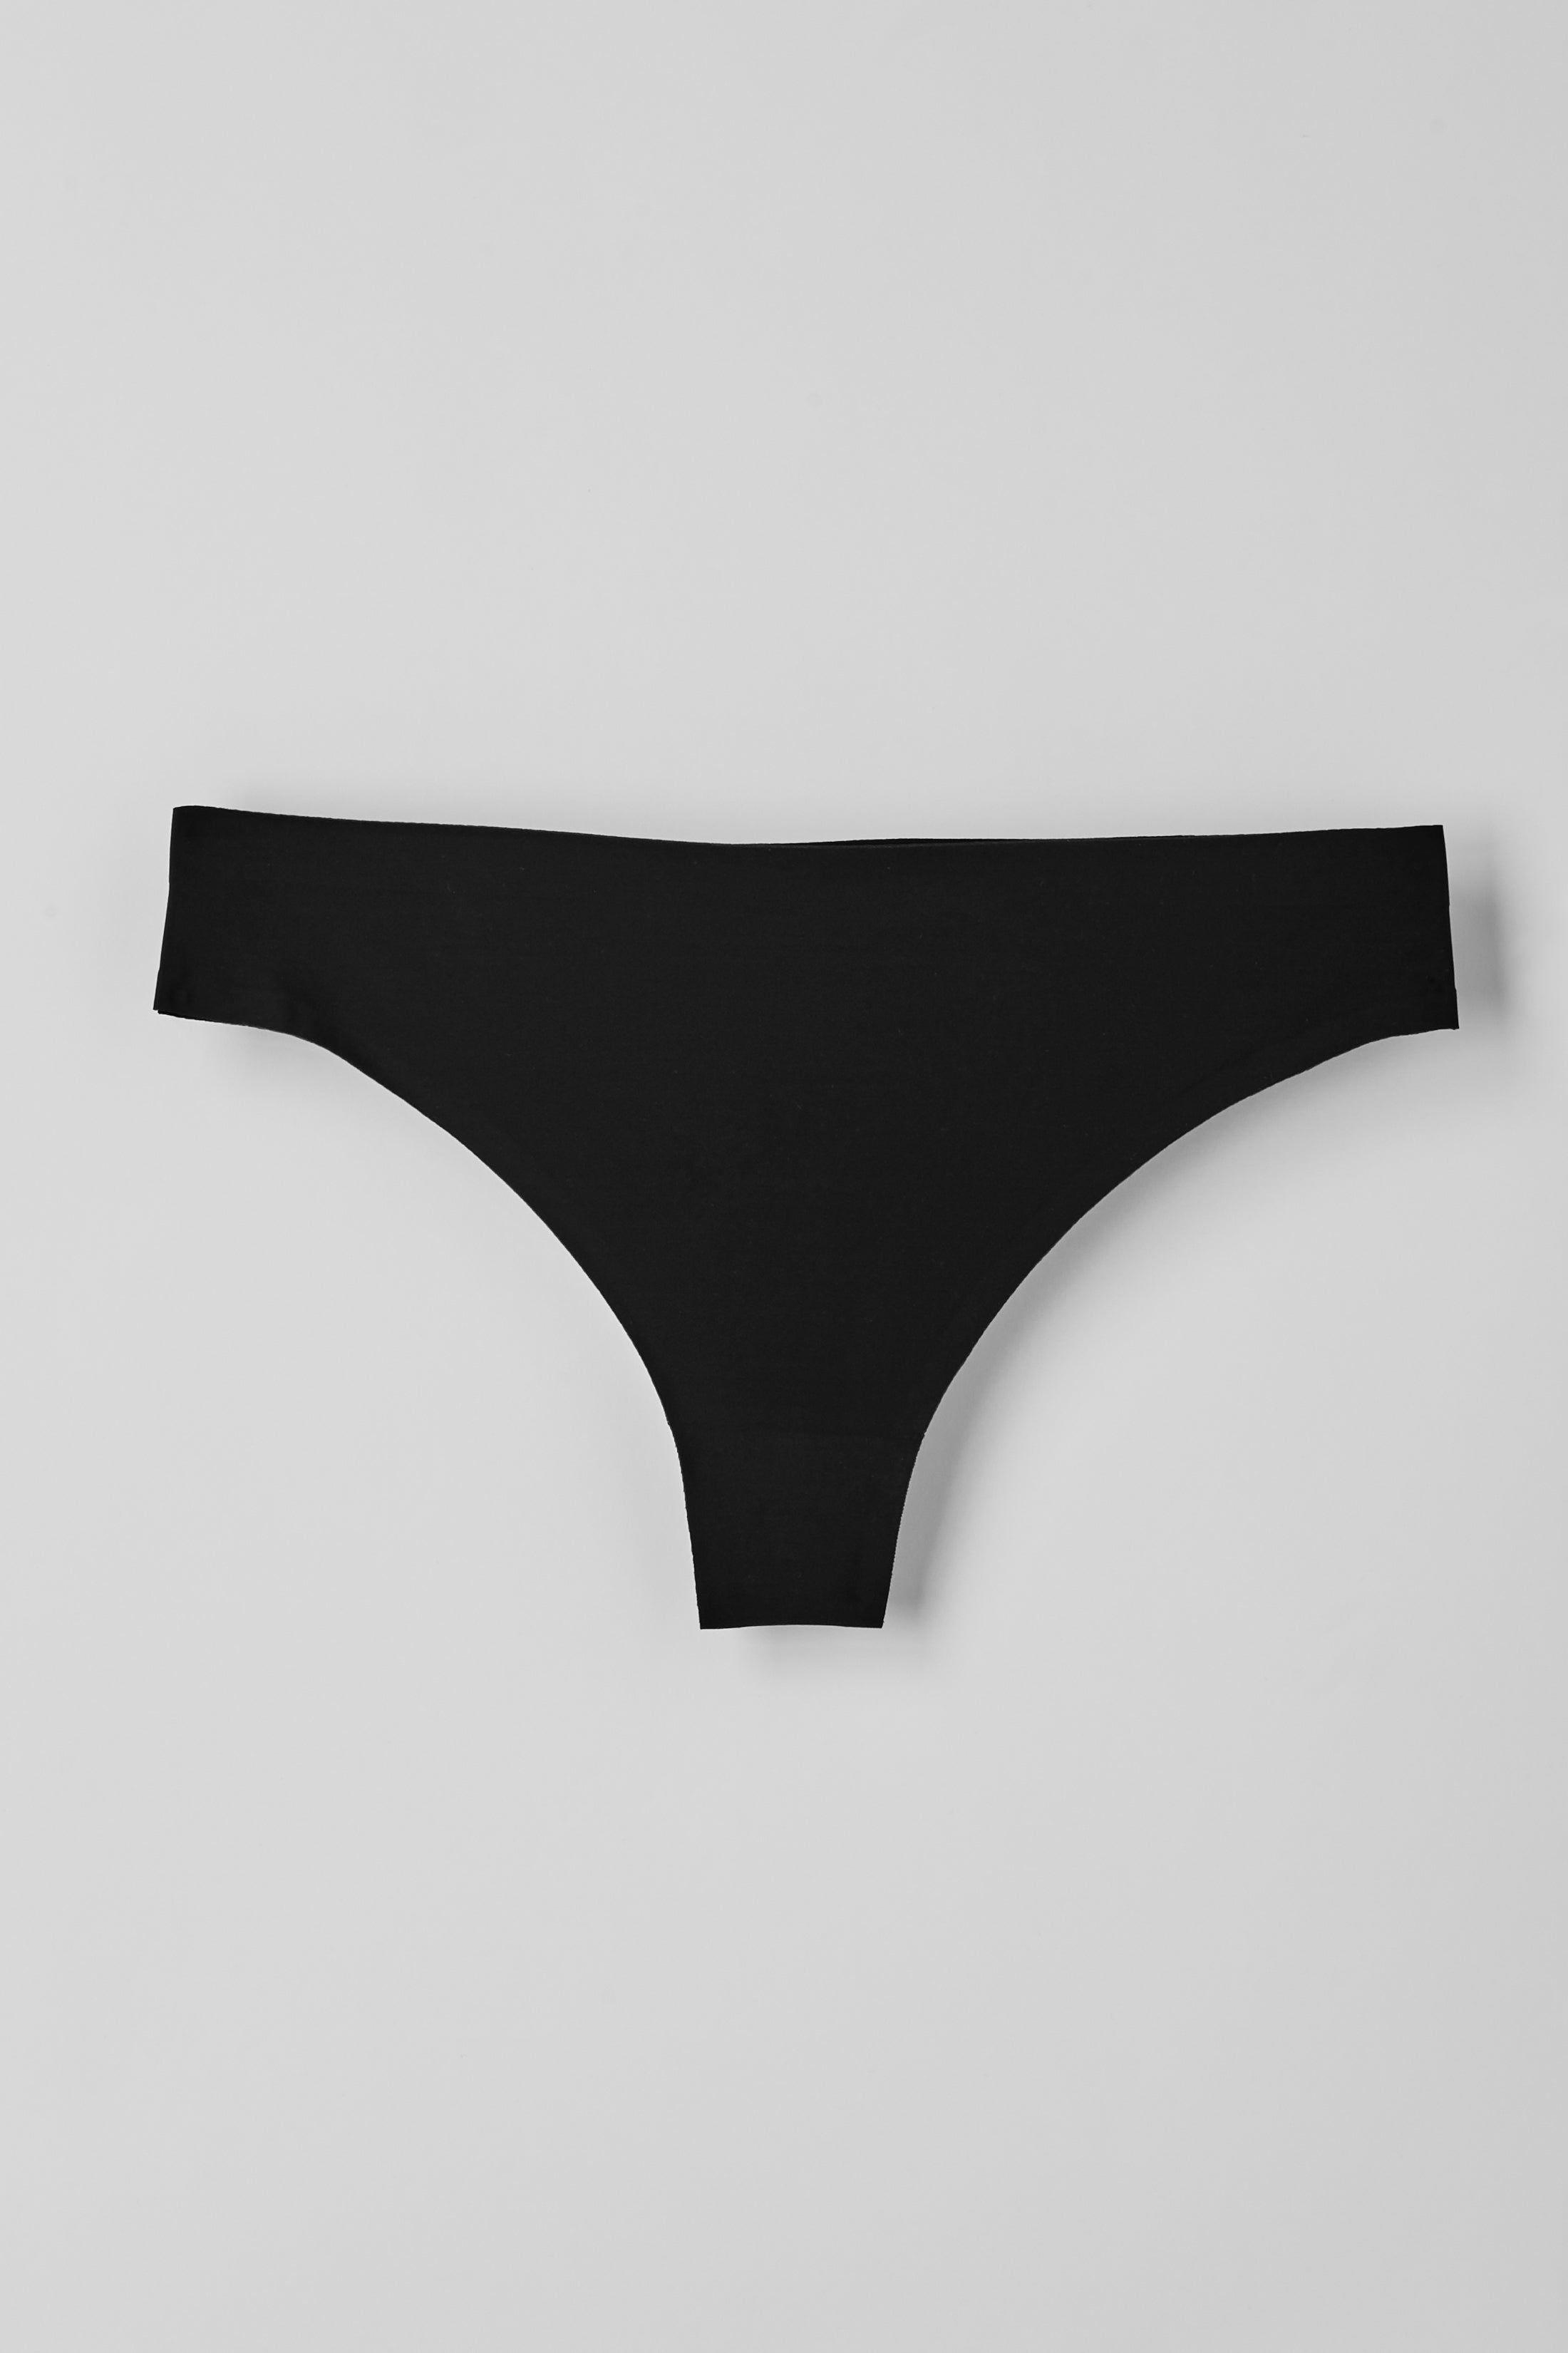  Stance W725D17SOL Women's Solid Thong Undies, Black